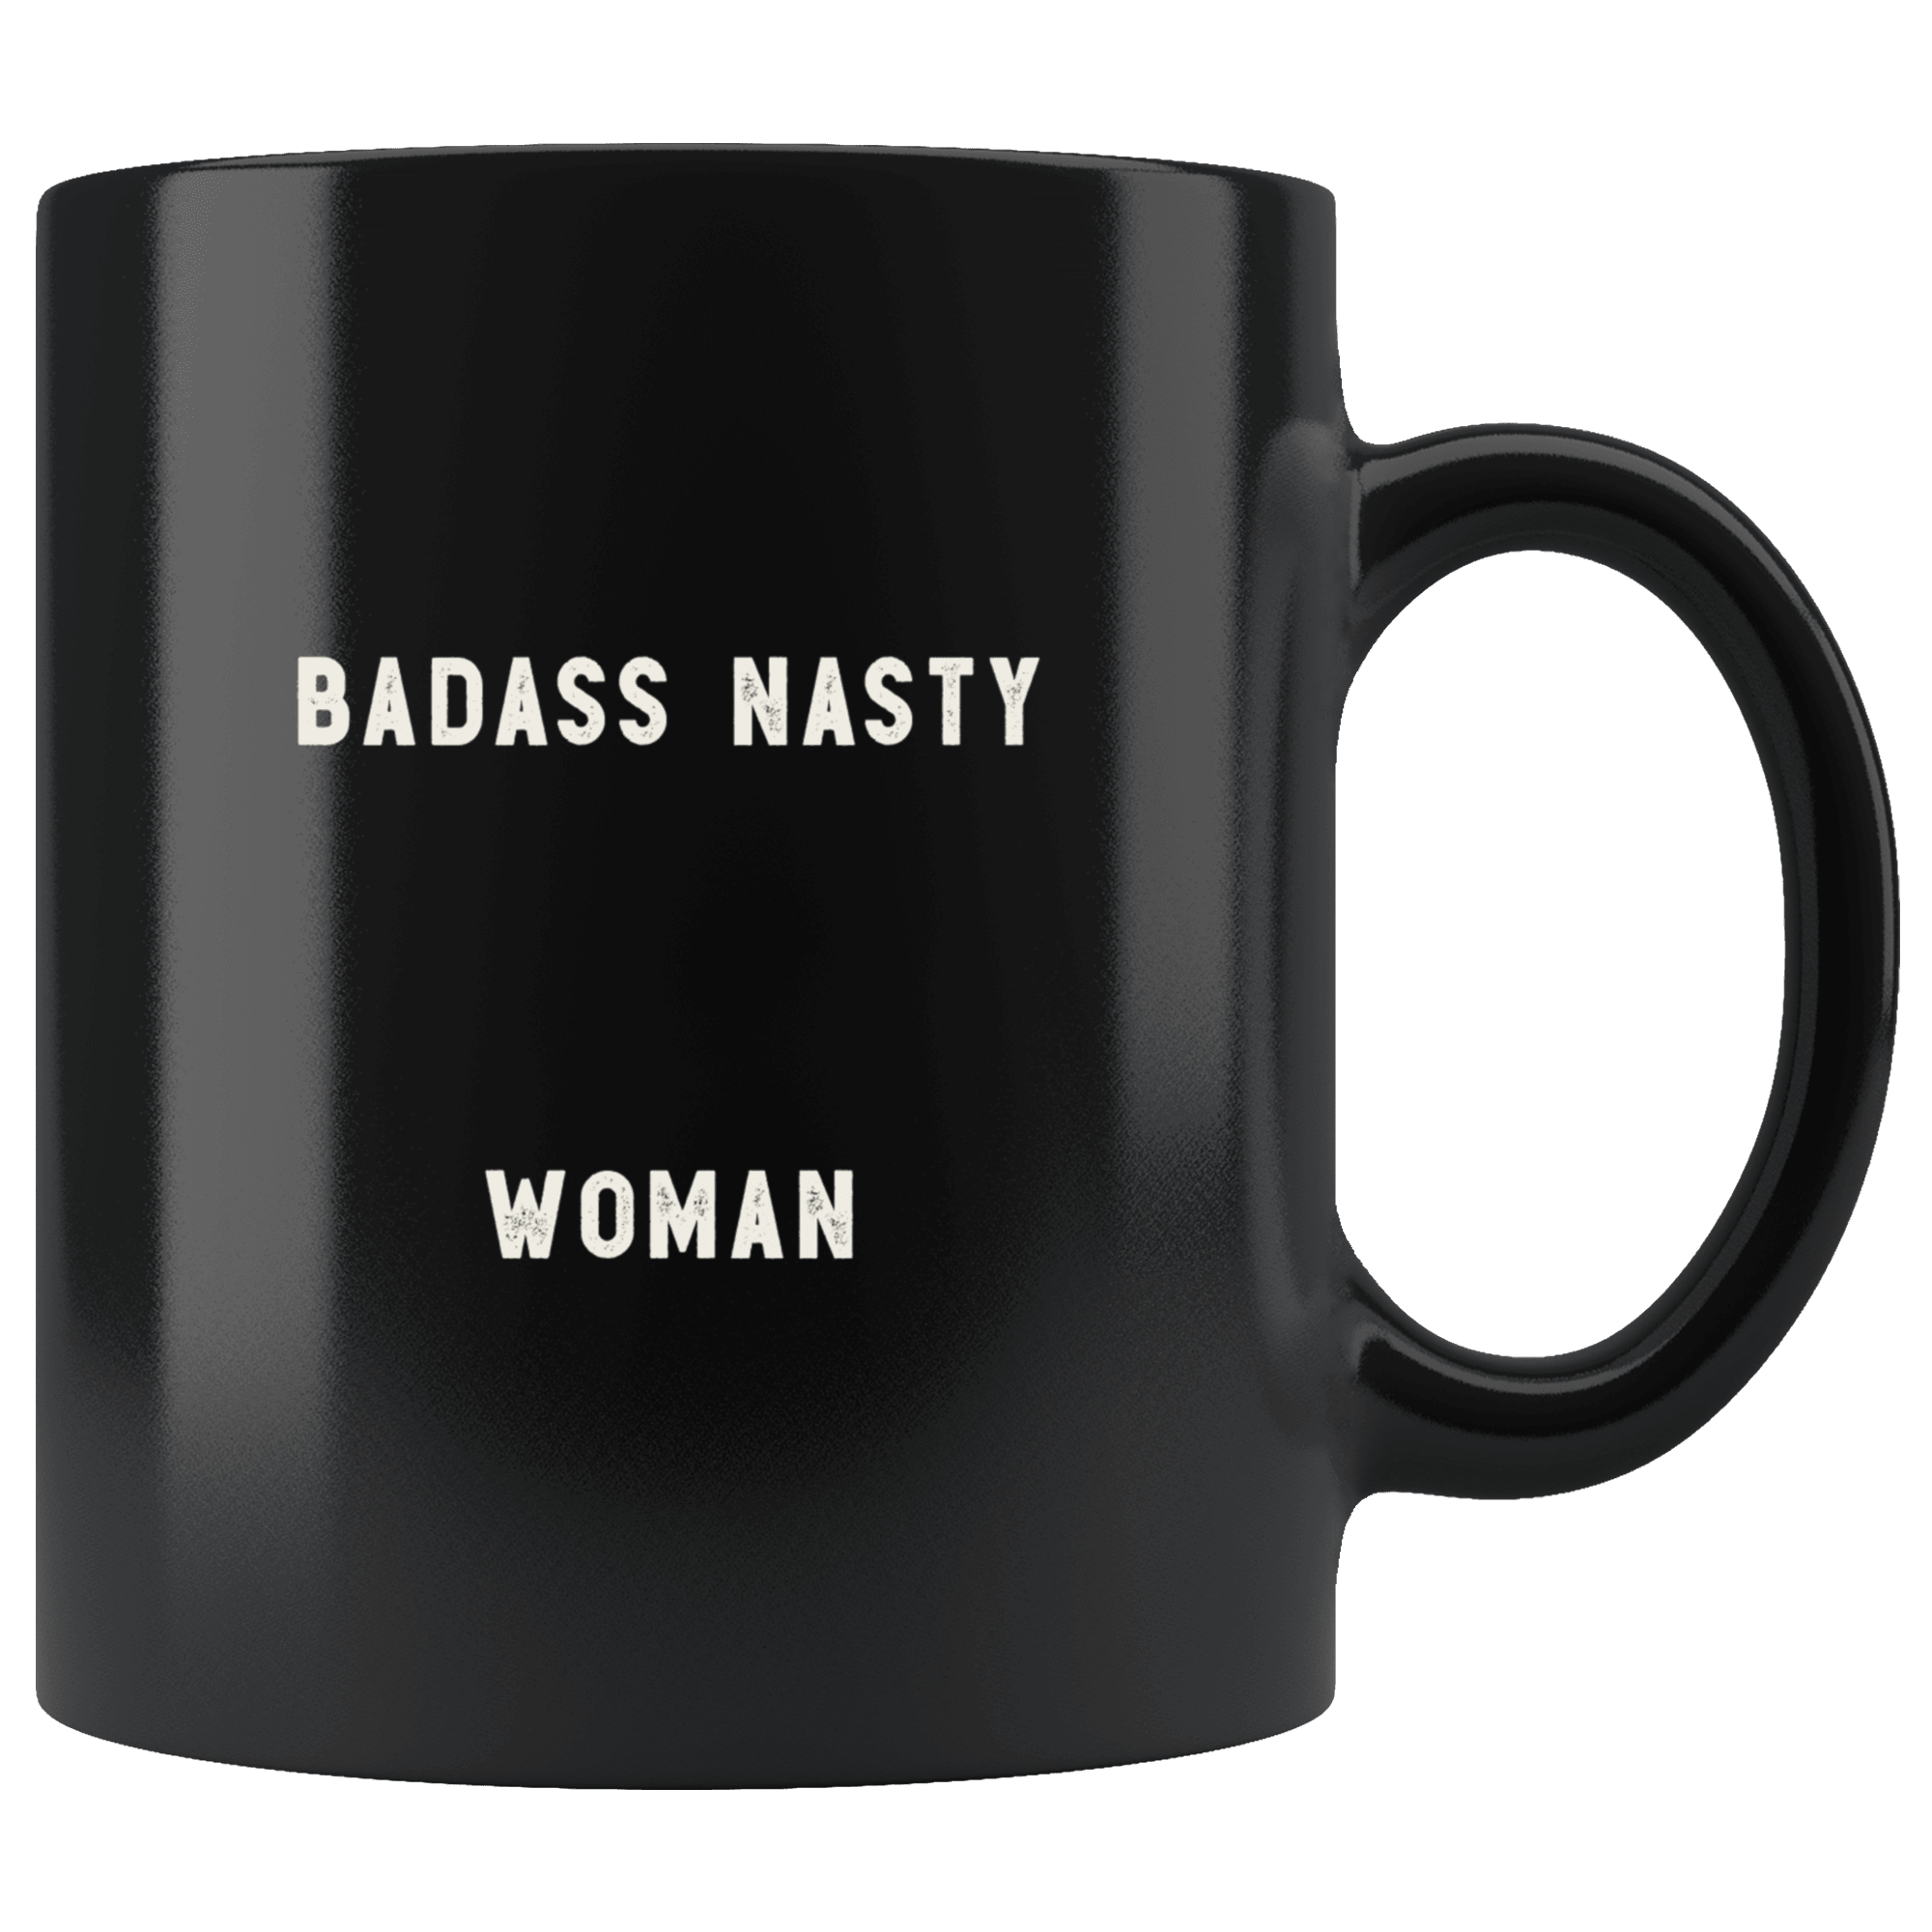 Cool Ass Black Woman Black Coffee Mug, 11oz – Cool Ass Black Woman.